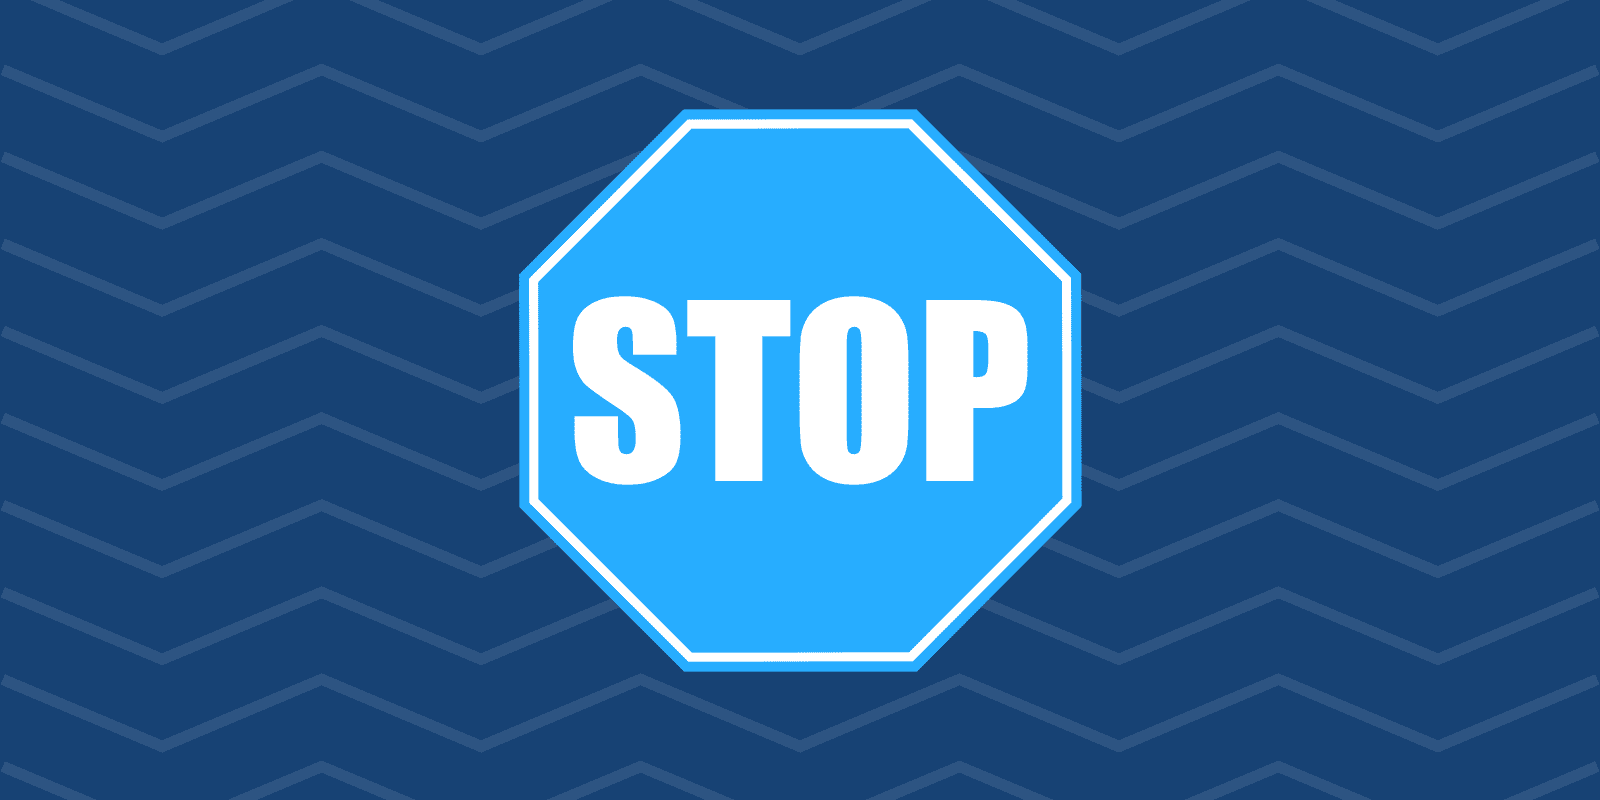 A blue stop sign illustration on a decorative background